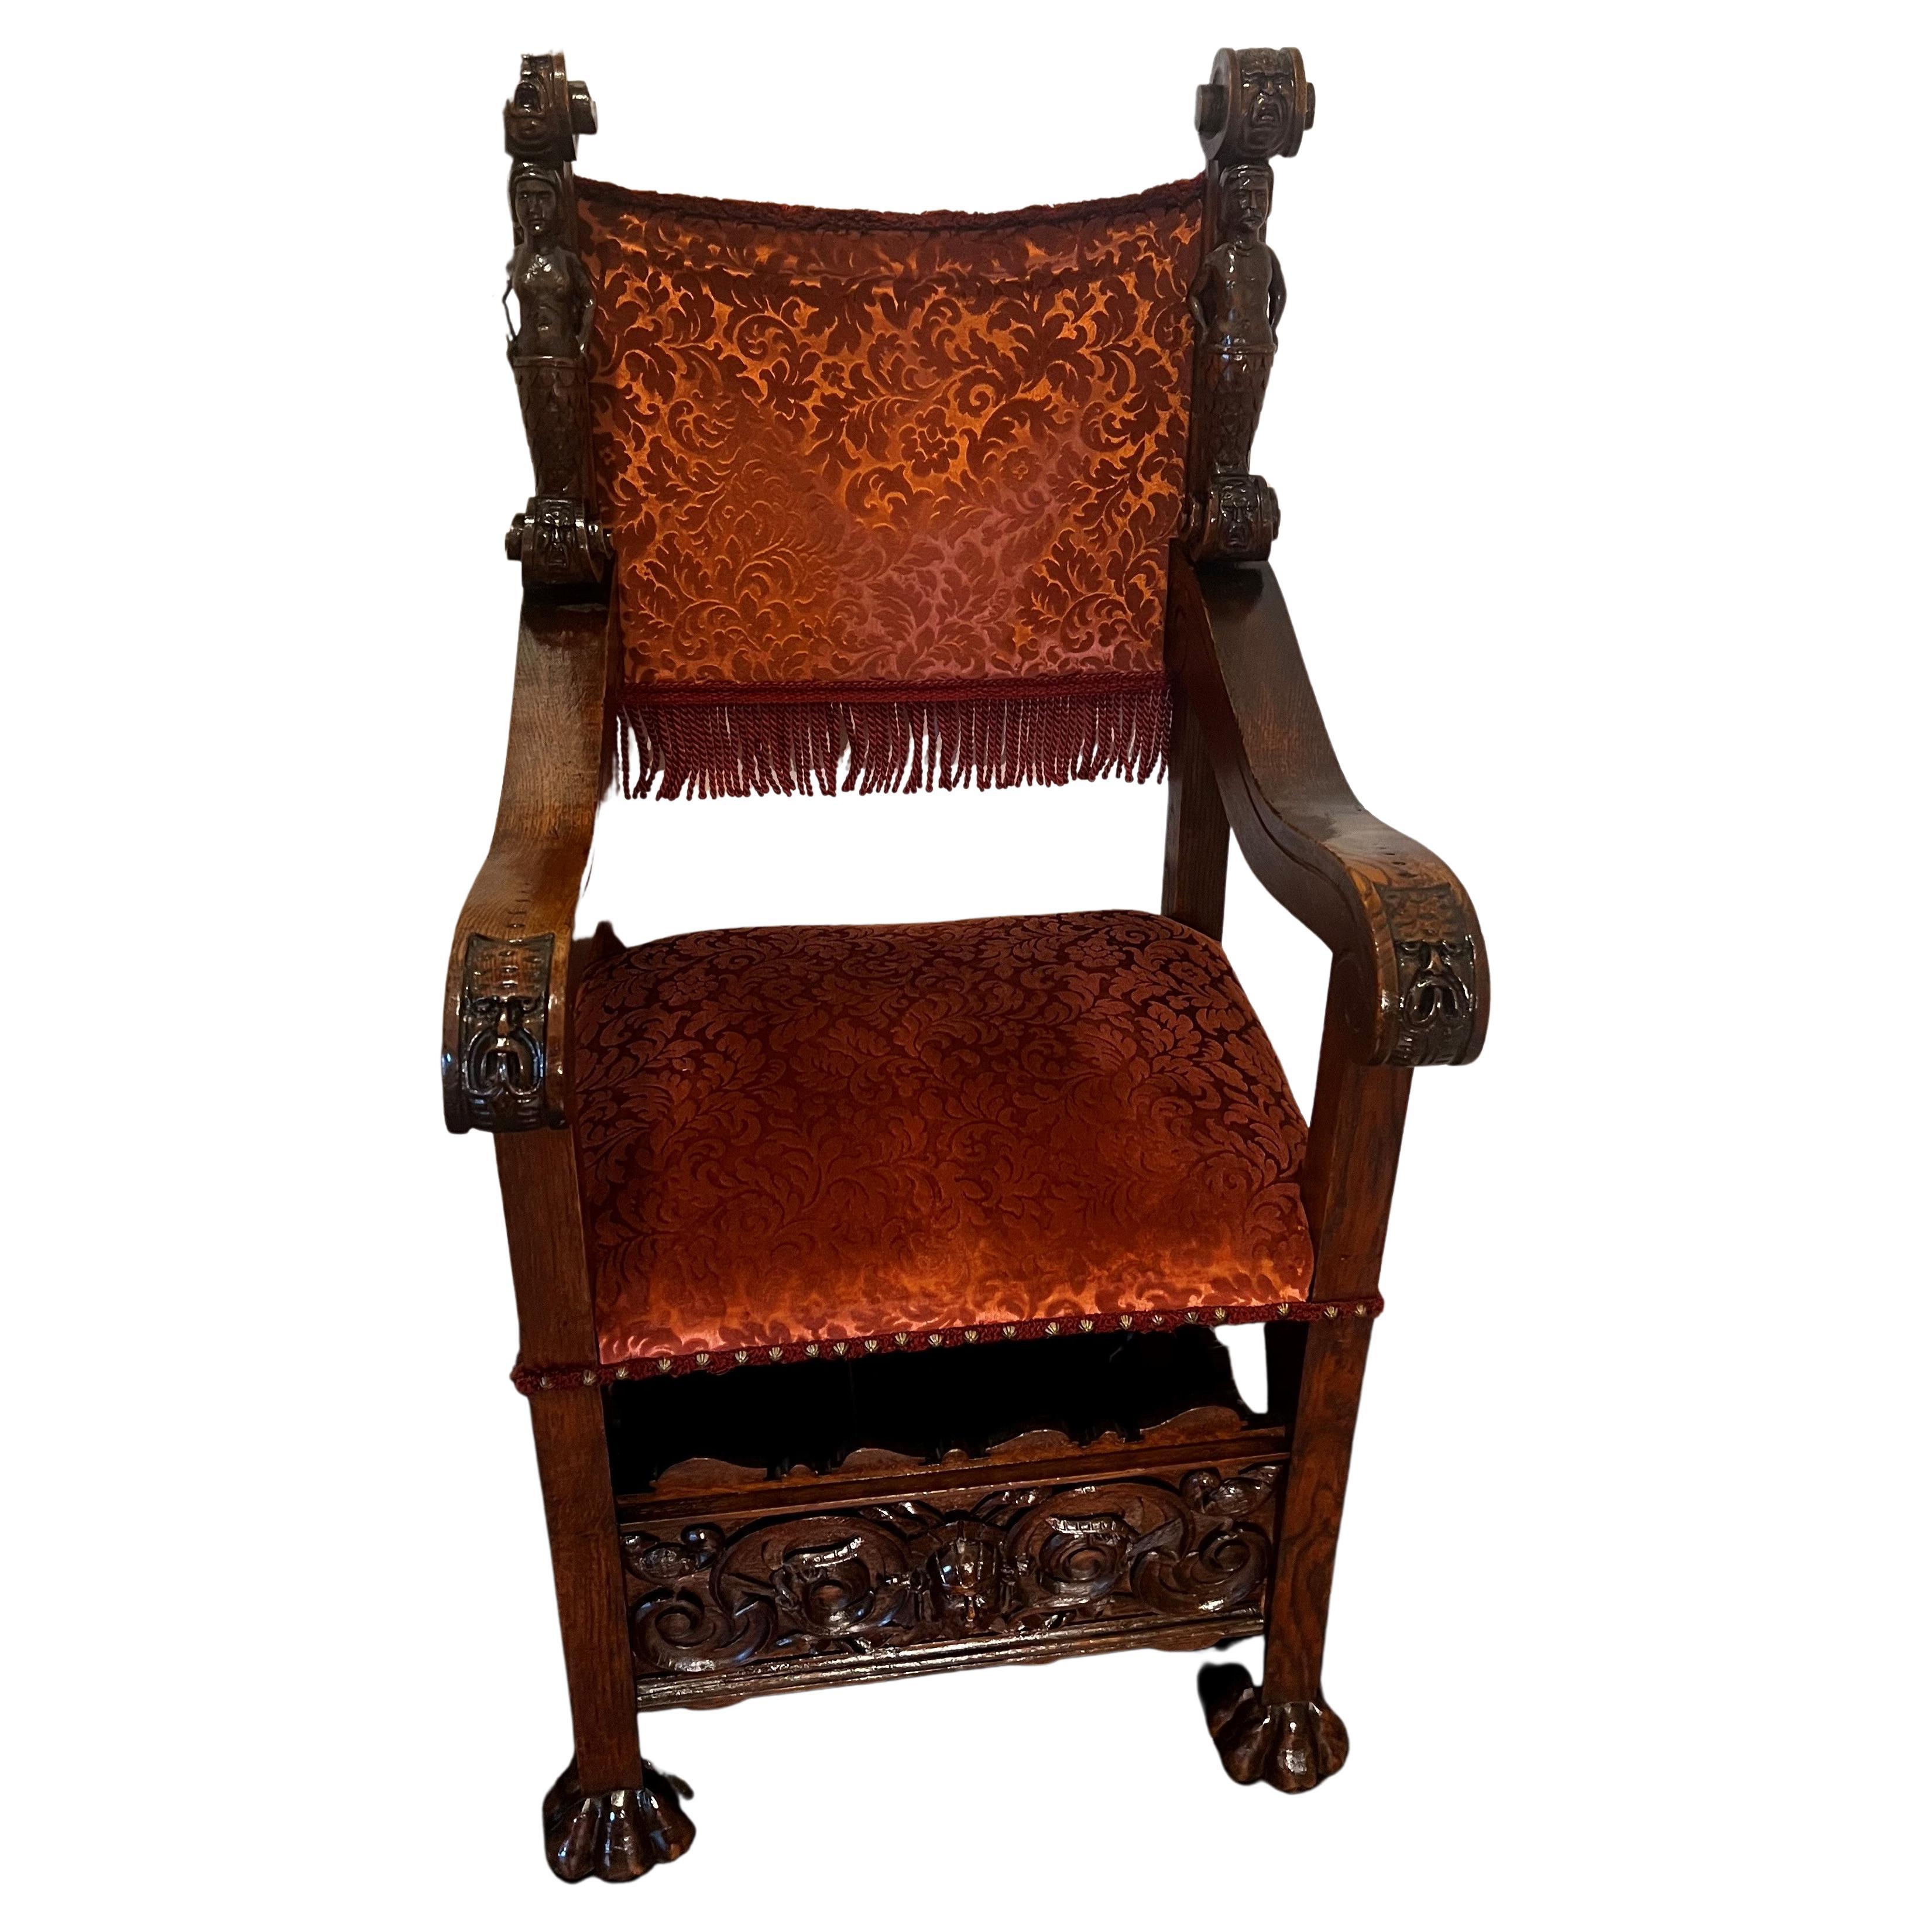 Antique 19th century solid british oak Throne Armchair